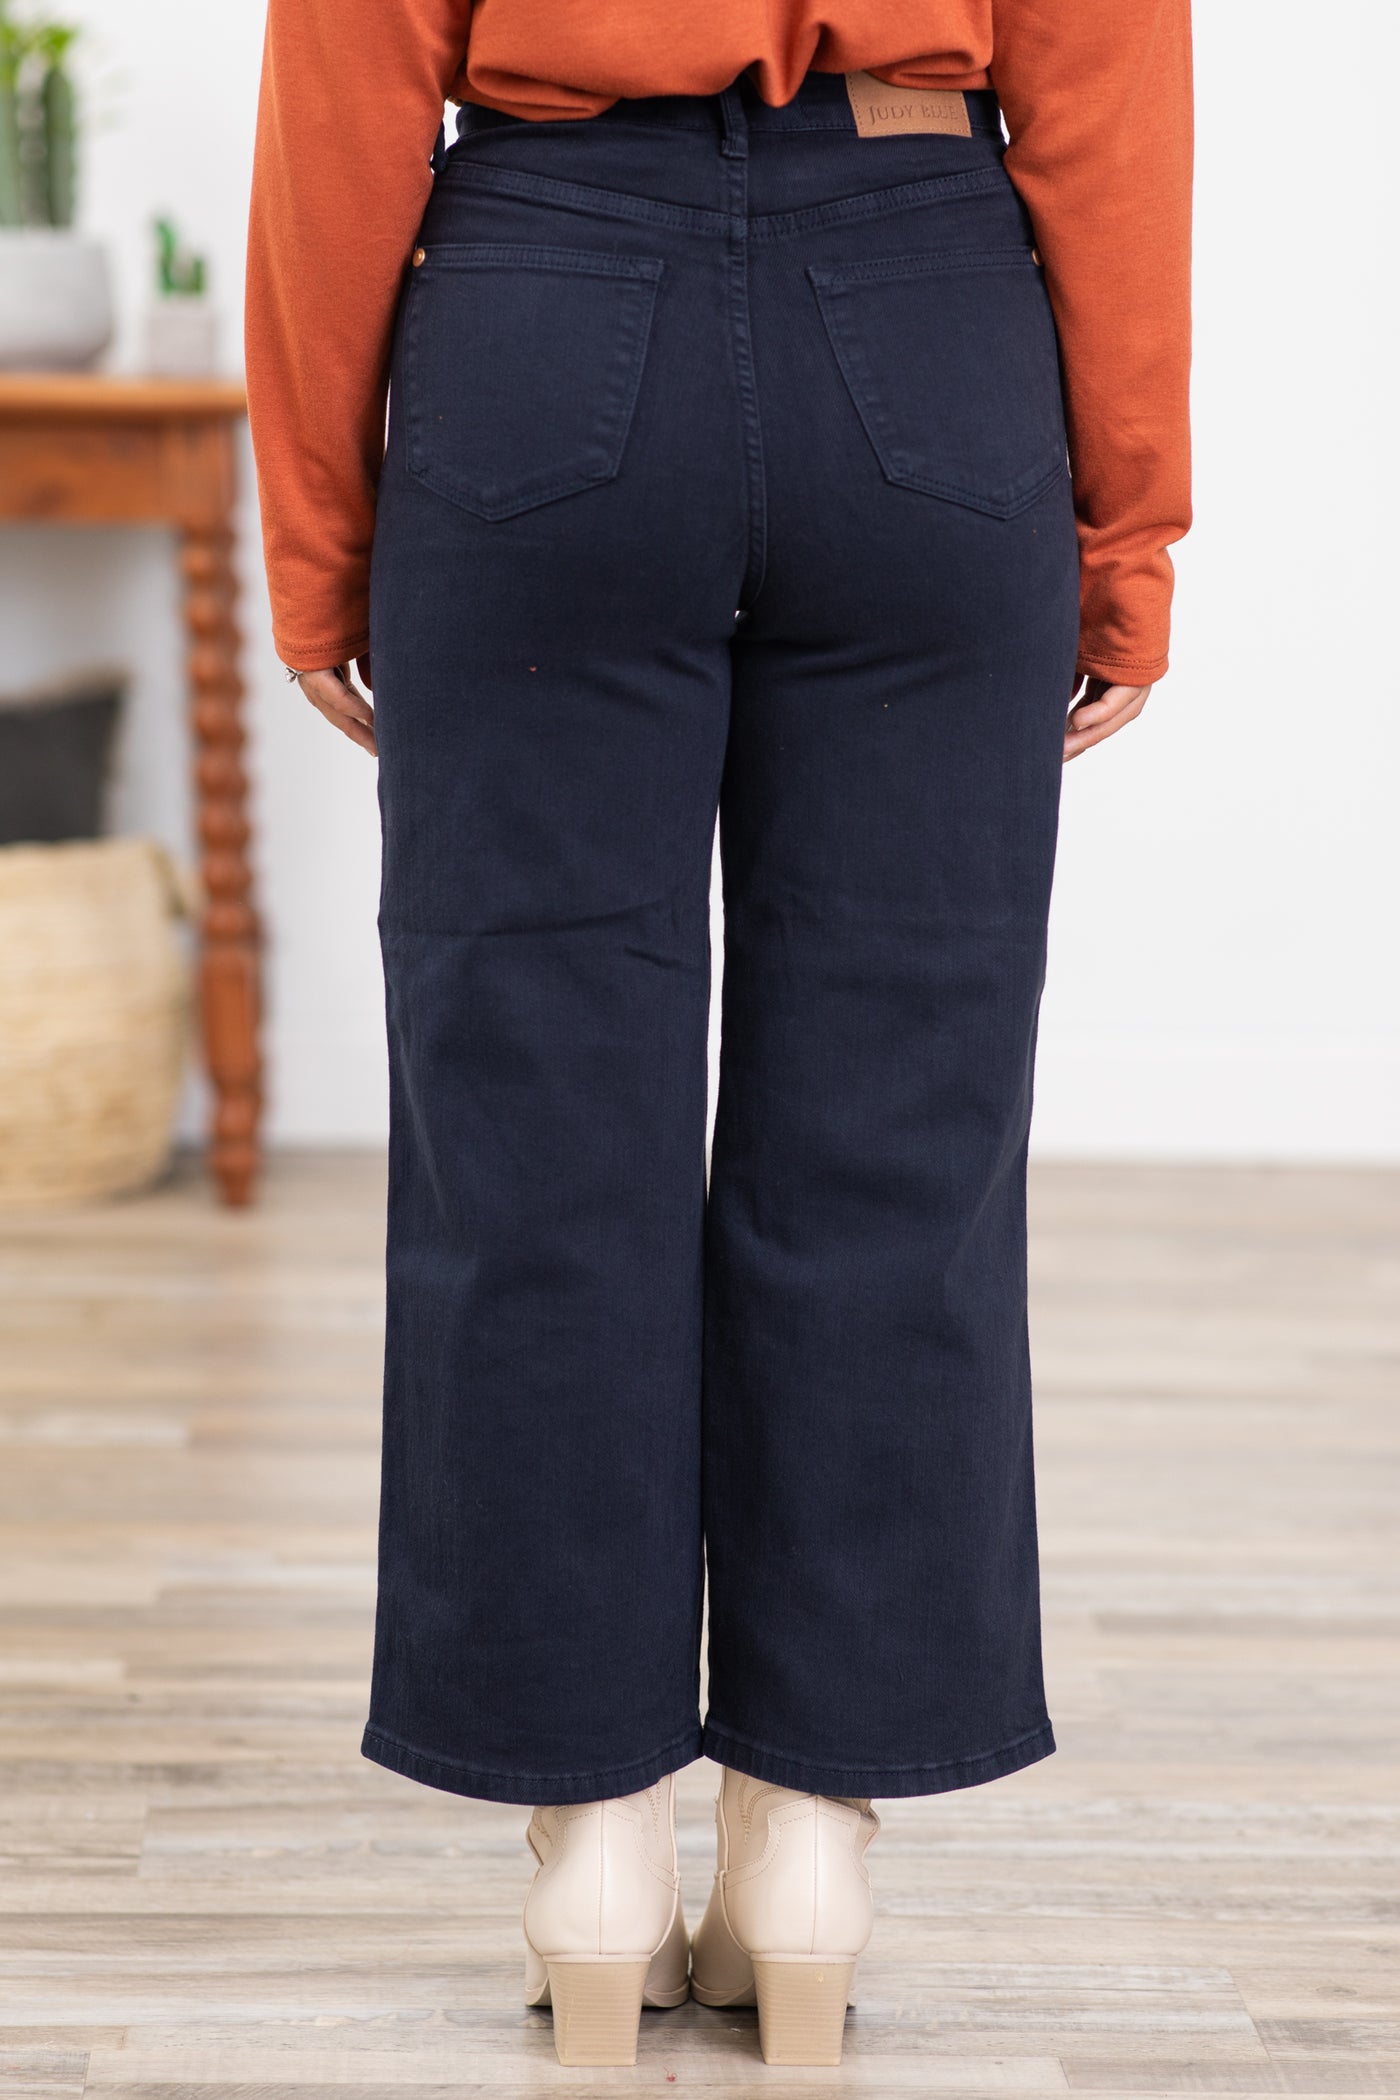 Judy Blue Navy Wide Leg Tummy Control Jeans